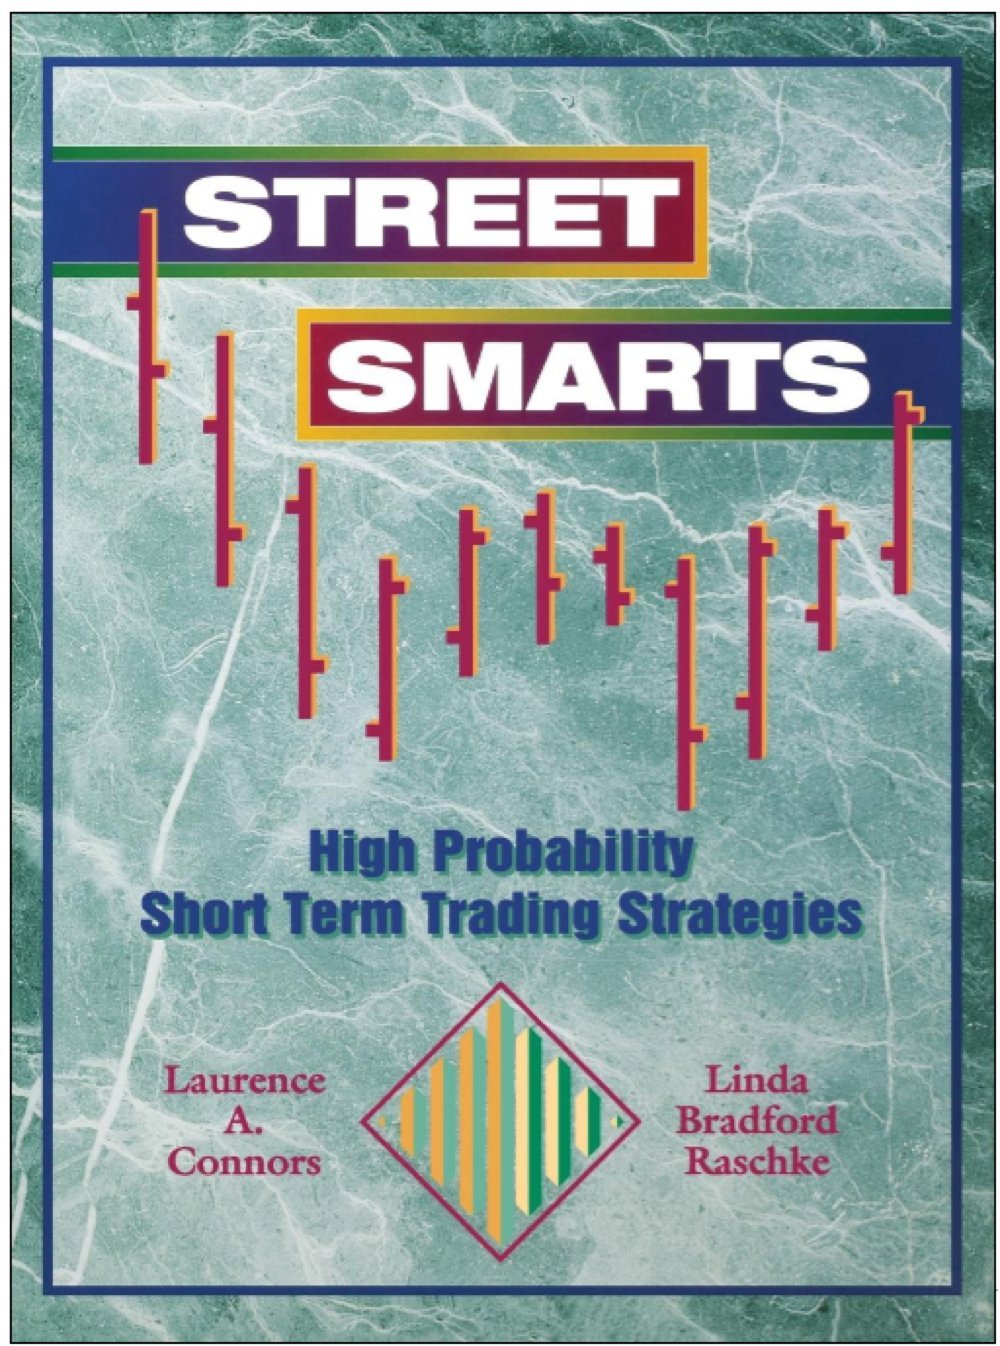 Street Smarts - High Probability Short Term Trading Strategies